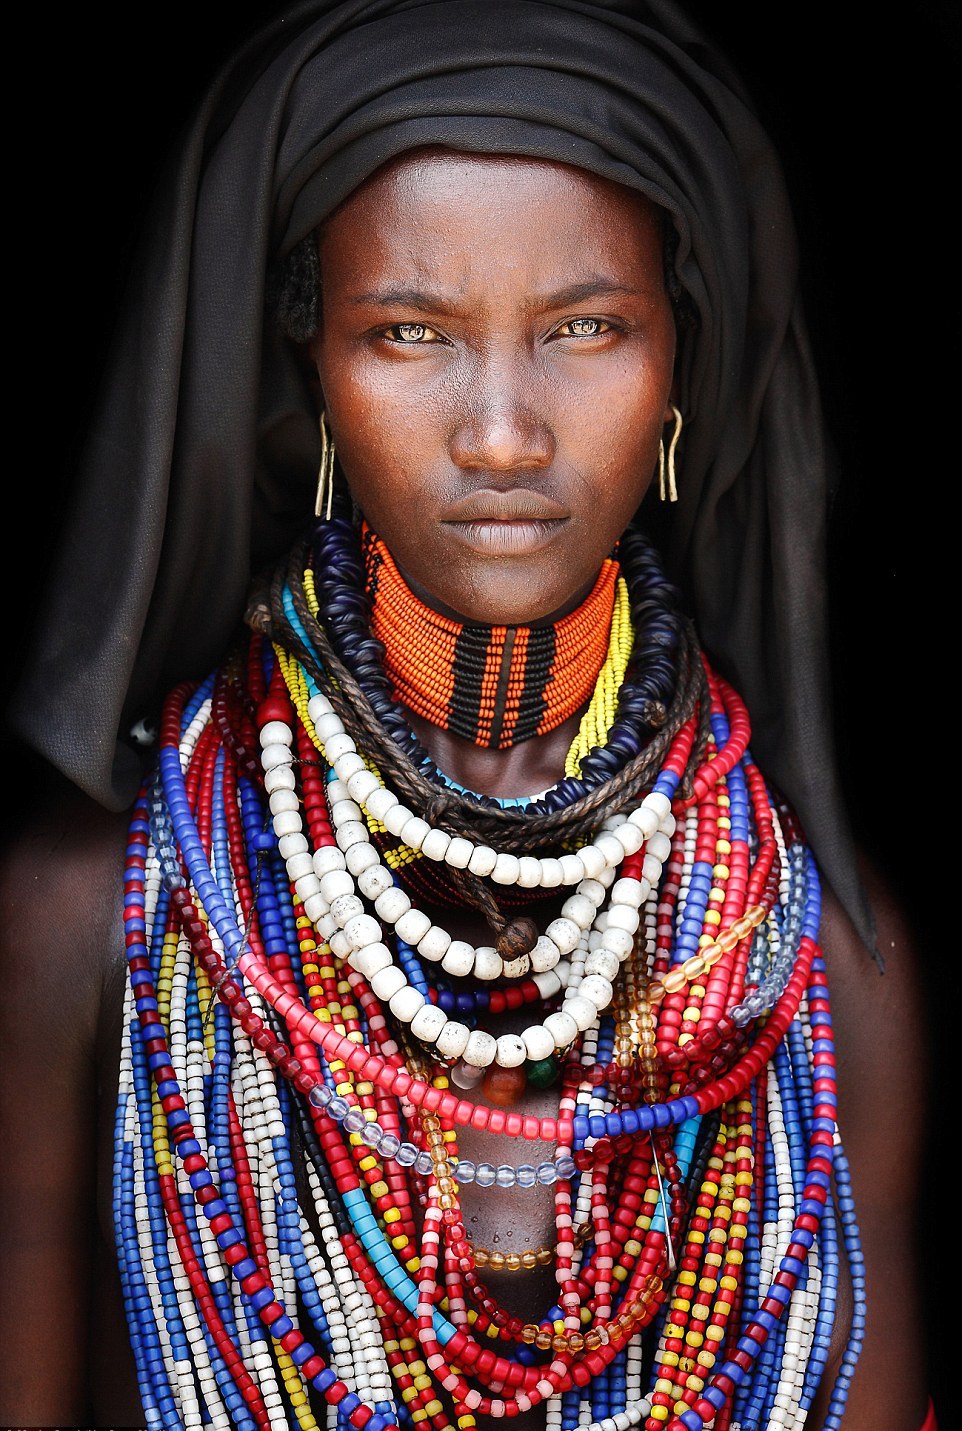 An Arbore girl, Ethiopia.